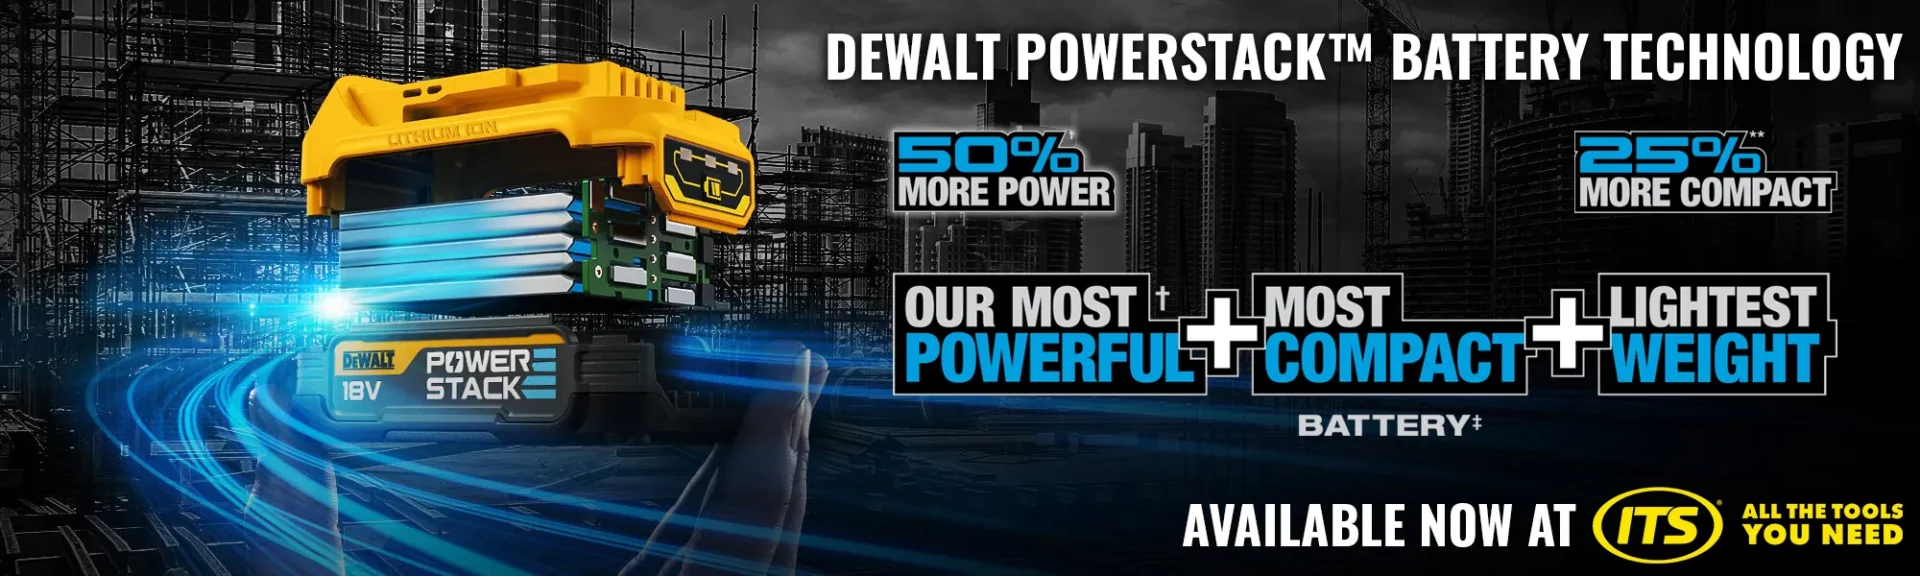 What is Dewalt Powerstack?